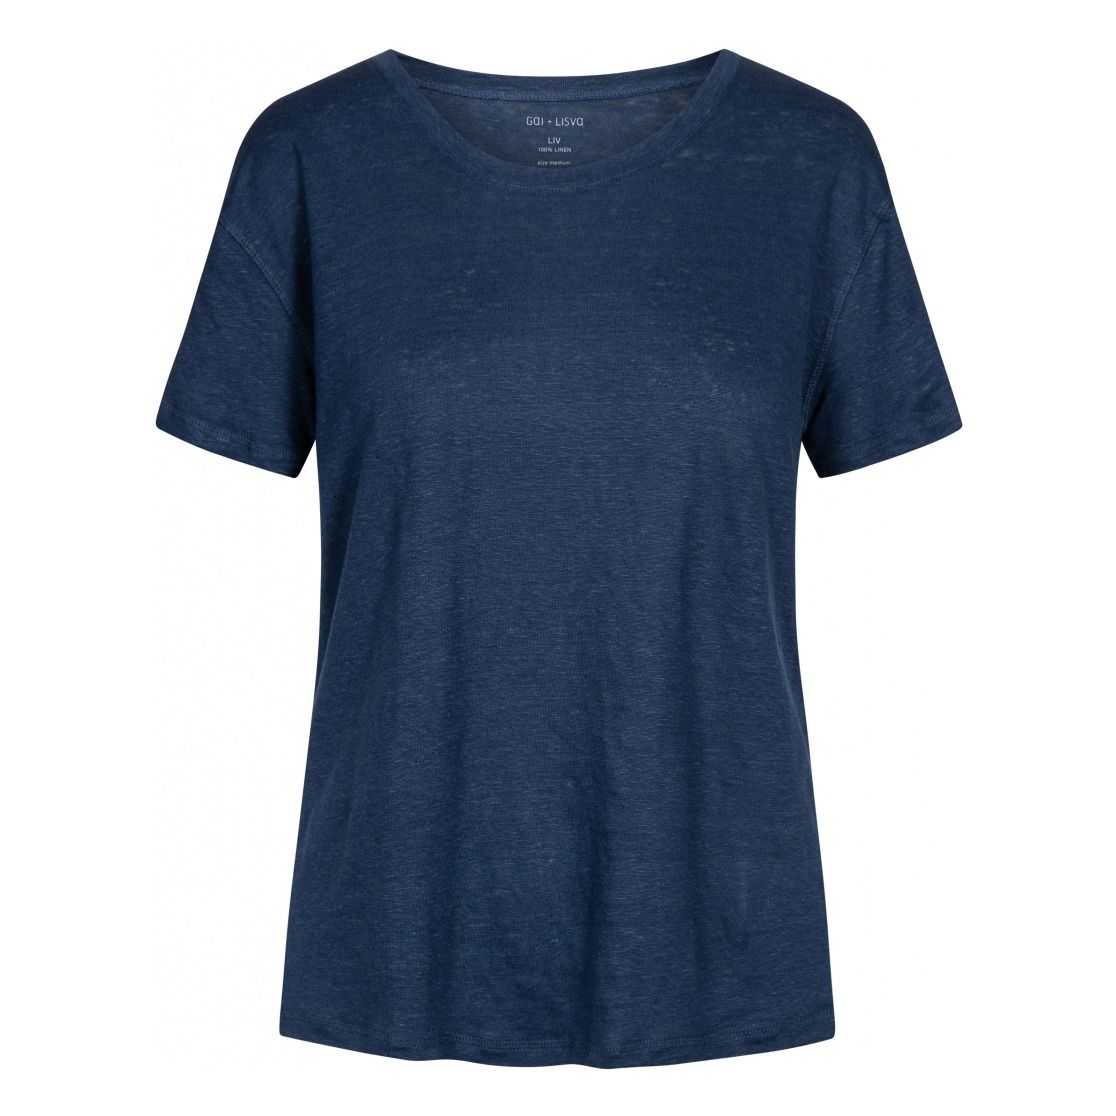 GAI+LISVA - T-Shirt Liv - Femme - Bleu marine